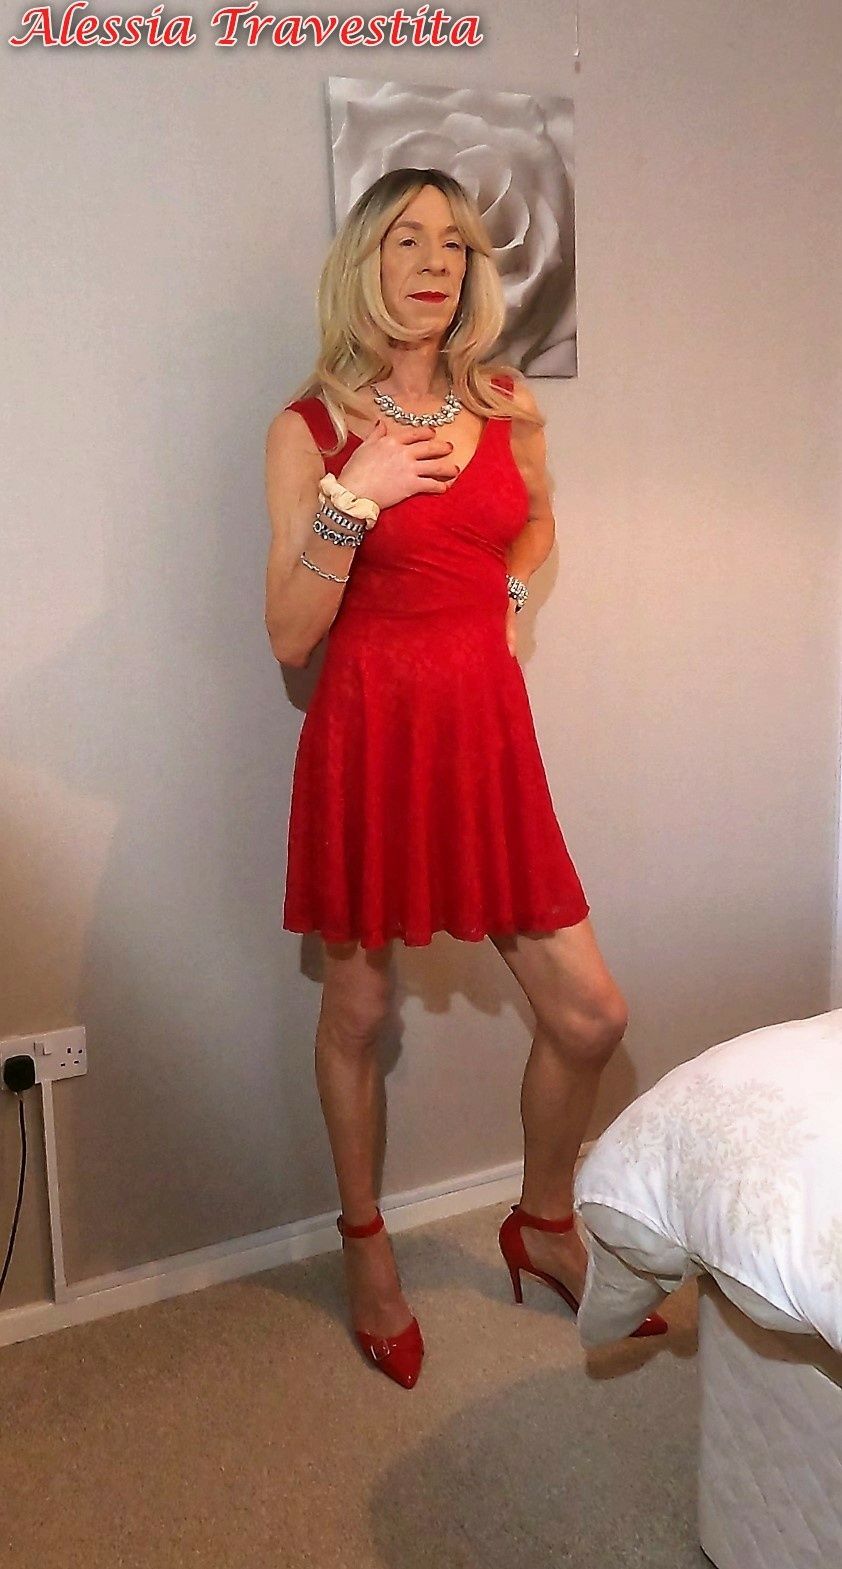 65 Alessia Travestita in Flirty Red Dress #42